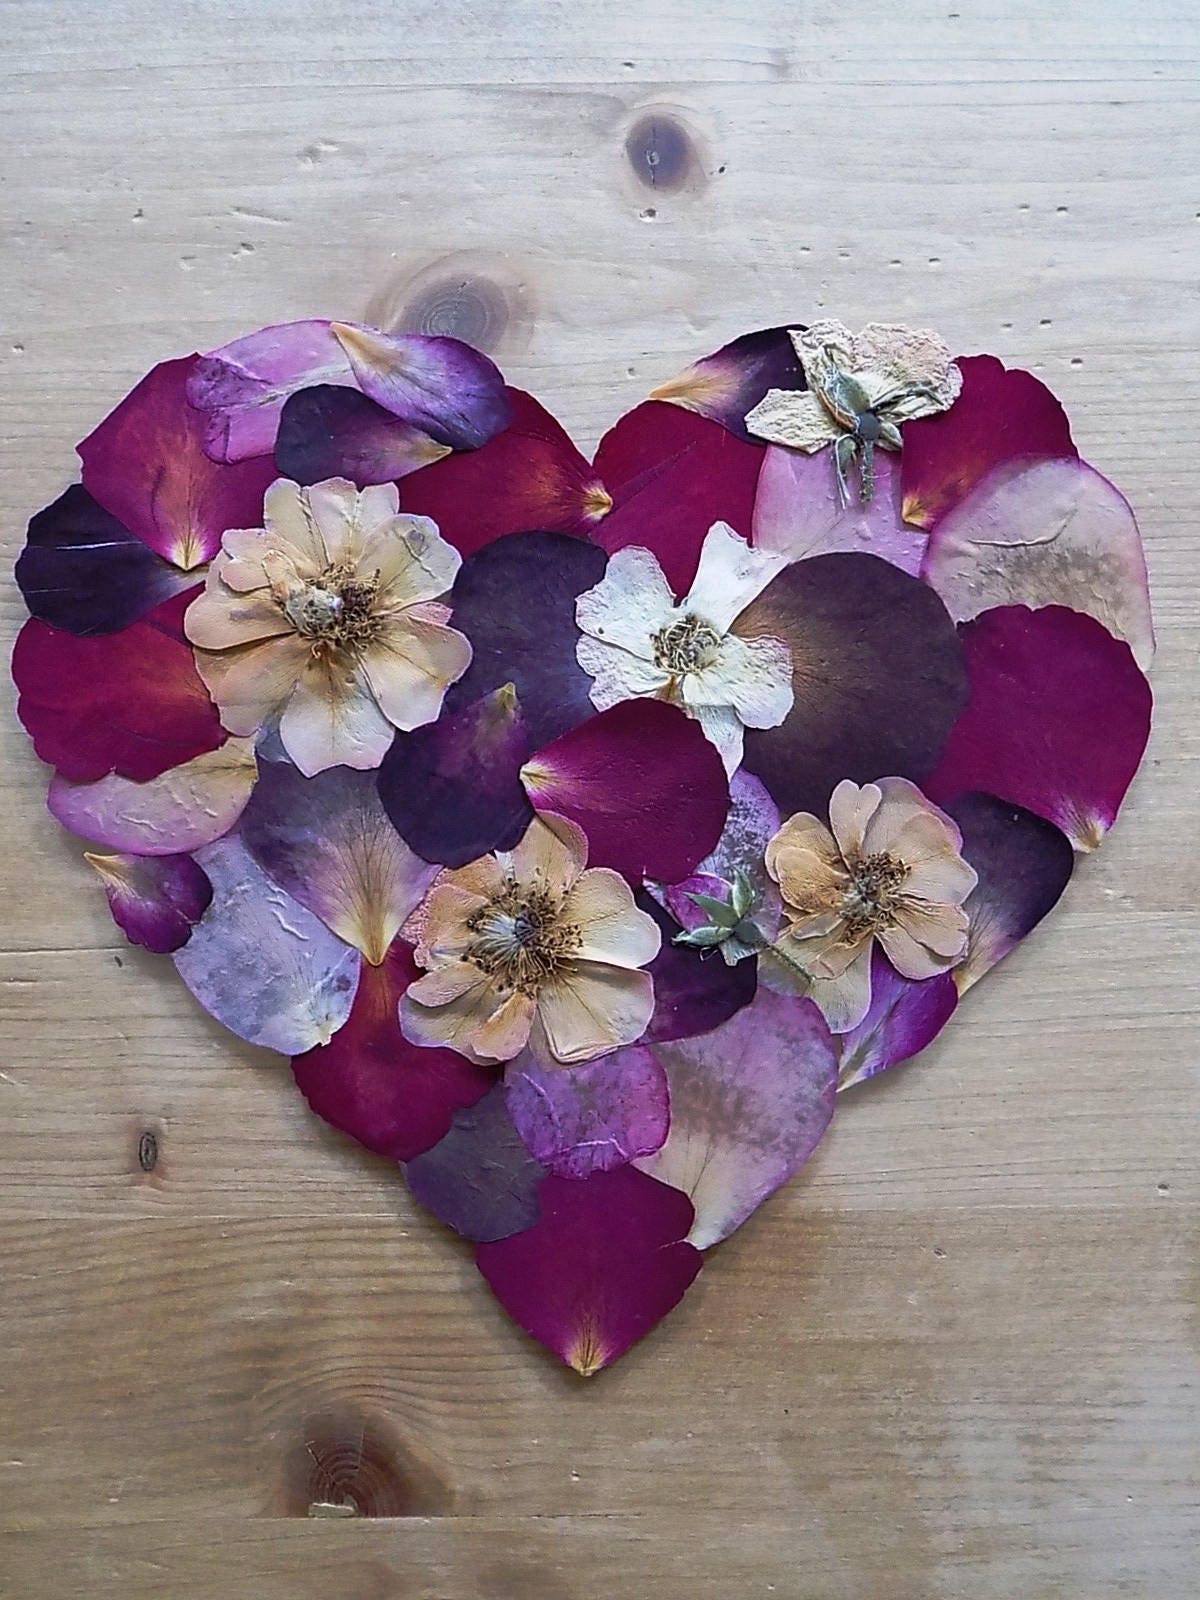 Heart Hands Pressed Flower Frame Home Decor Birthday Gift Ideas